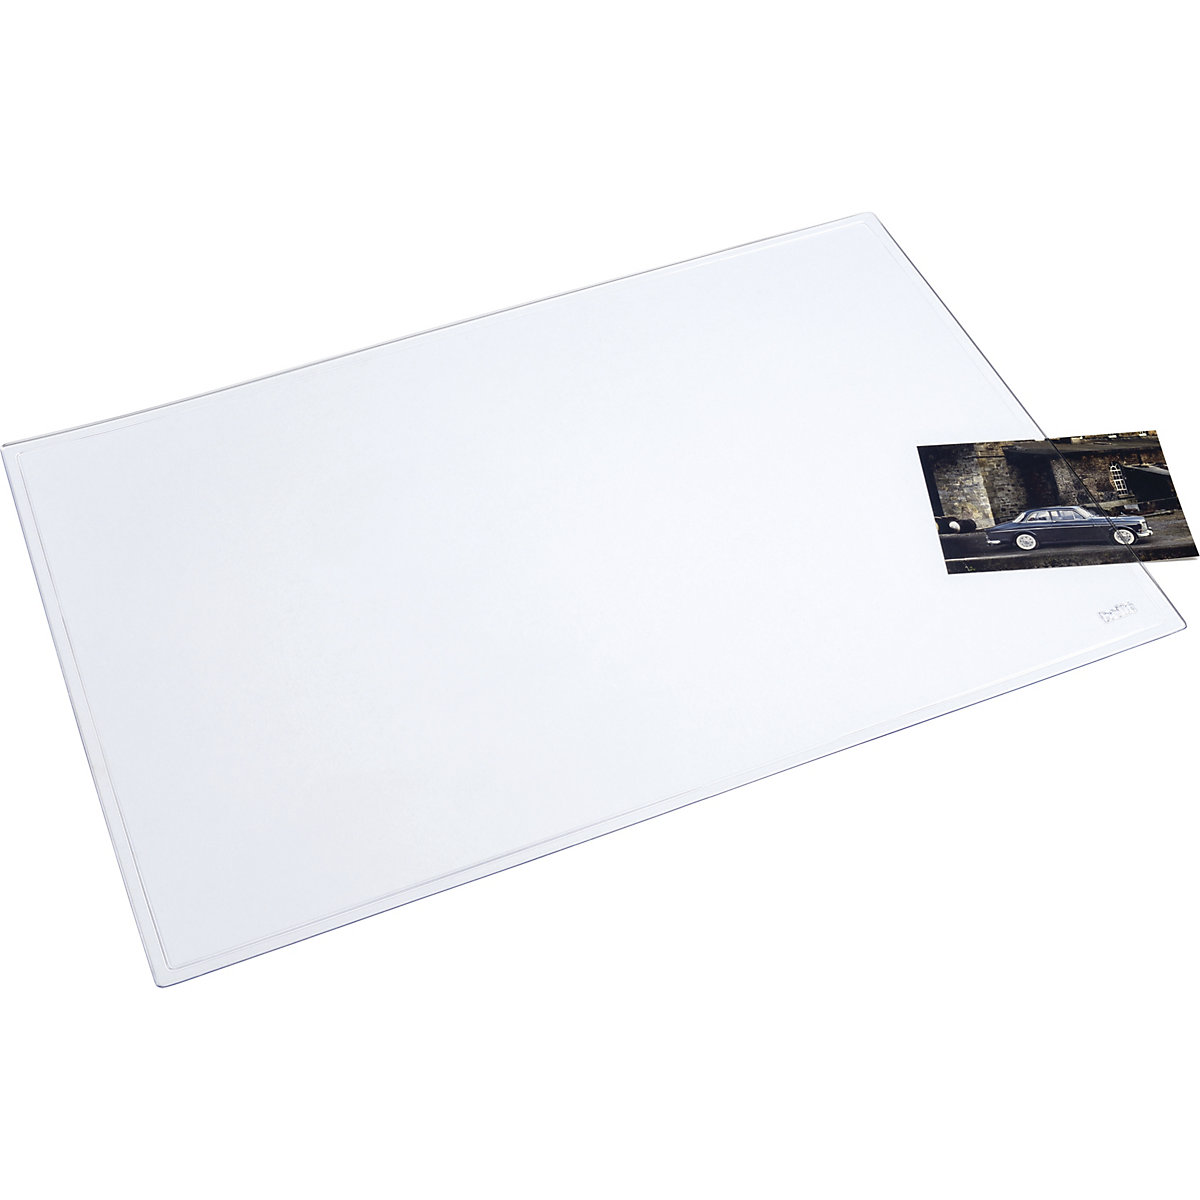 Suporte de escrita – helit, LxP 530 x 400 mm, embalagem de 5 unid., transparente claro-3